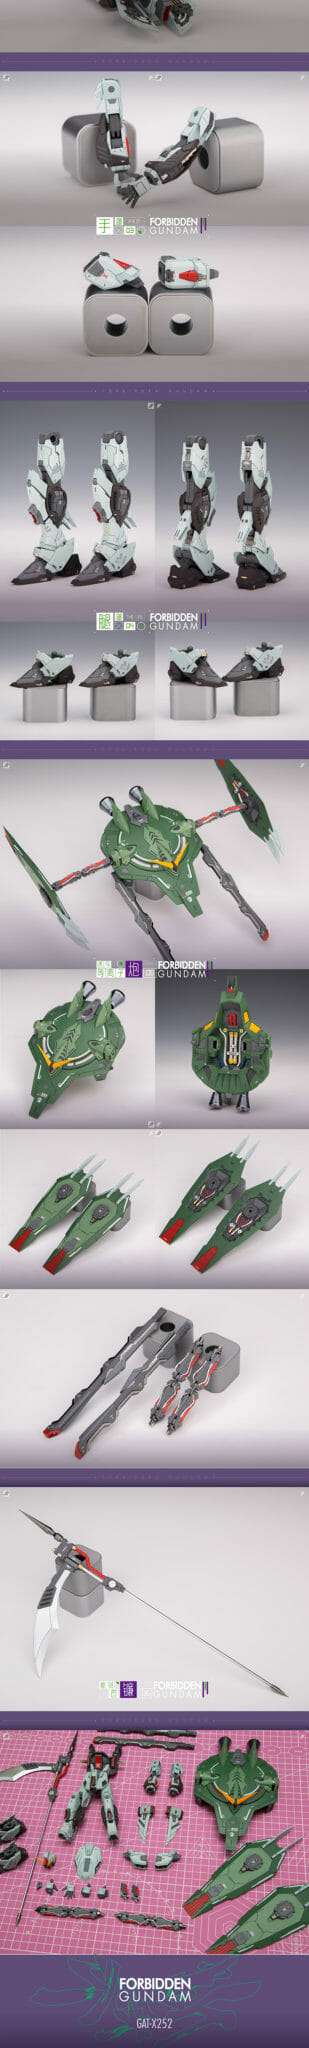 Artisan Club 1:100 Forbidden Gundam Conversion Kit